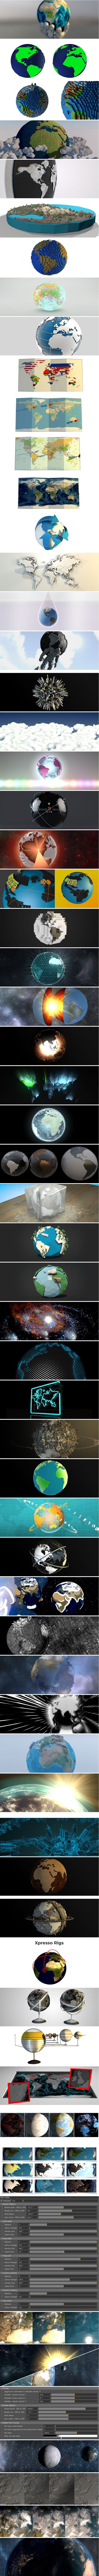 Earth and Globe Pack: 50+ C4D Models